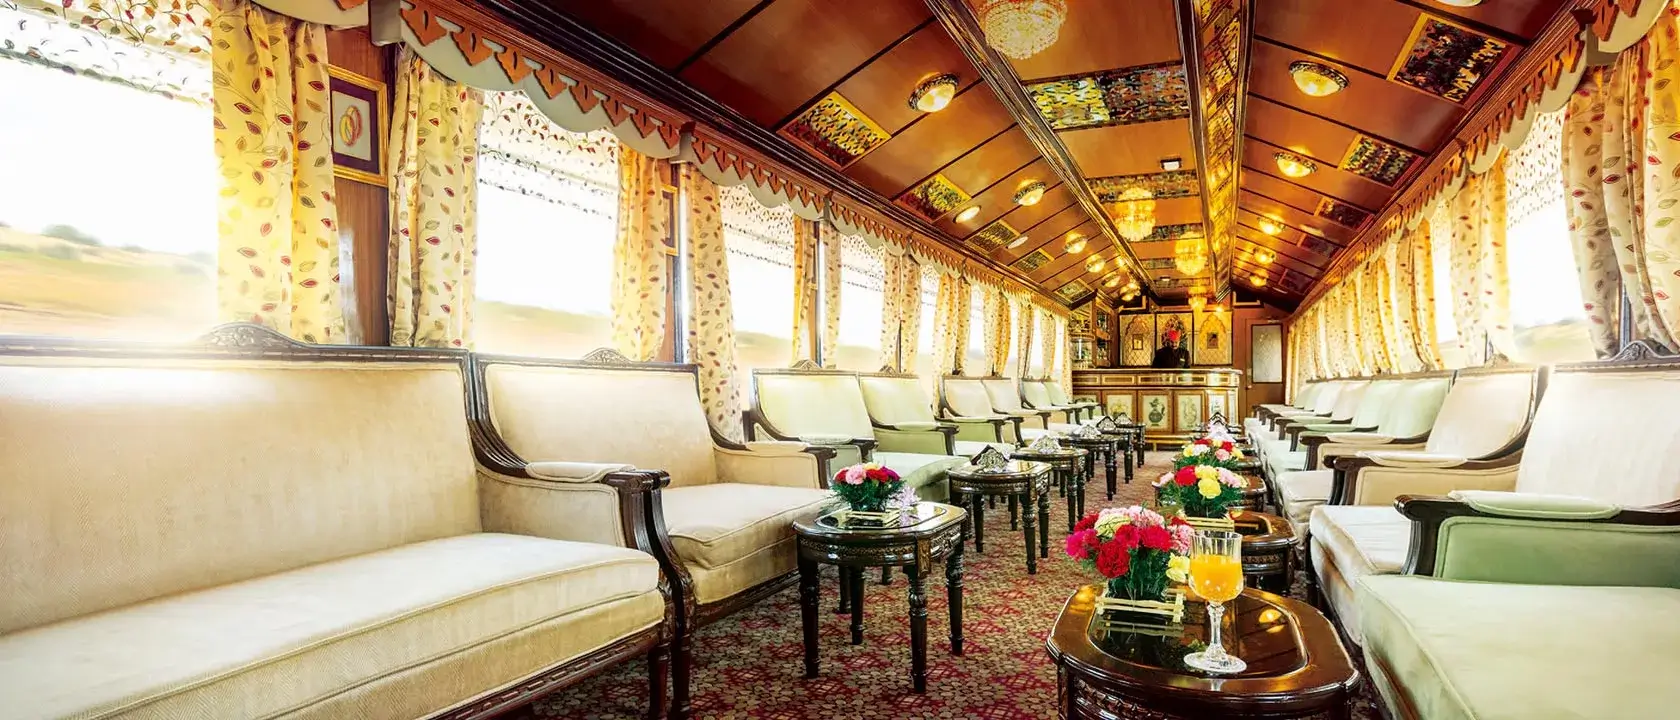 palace on wheels train